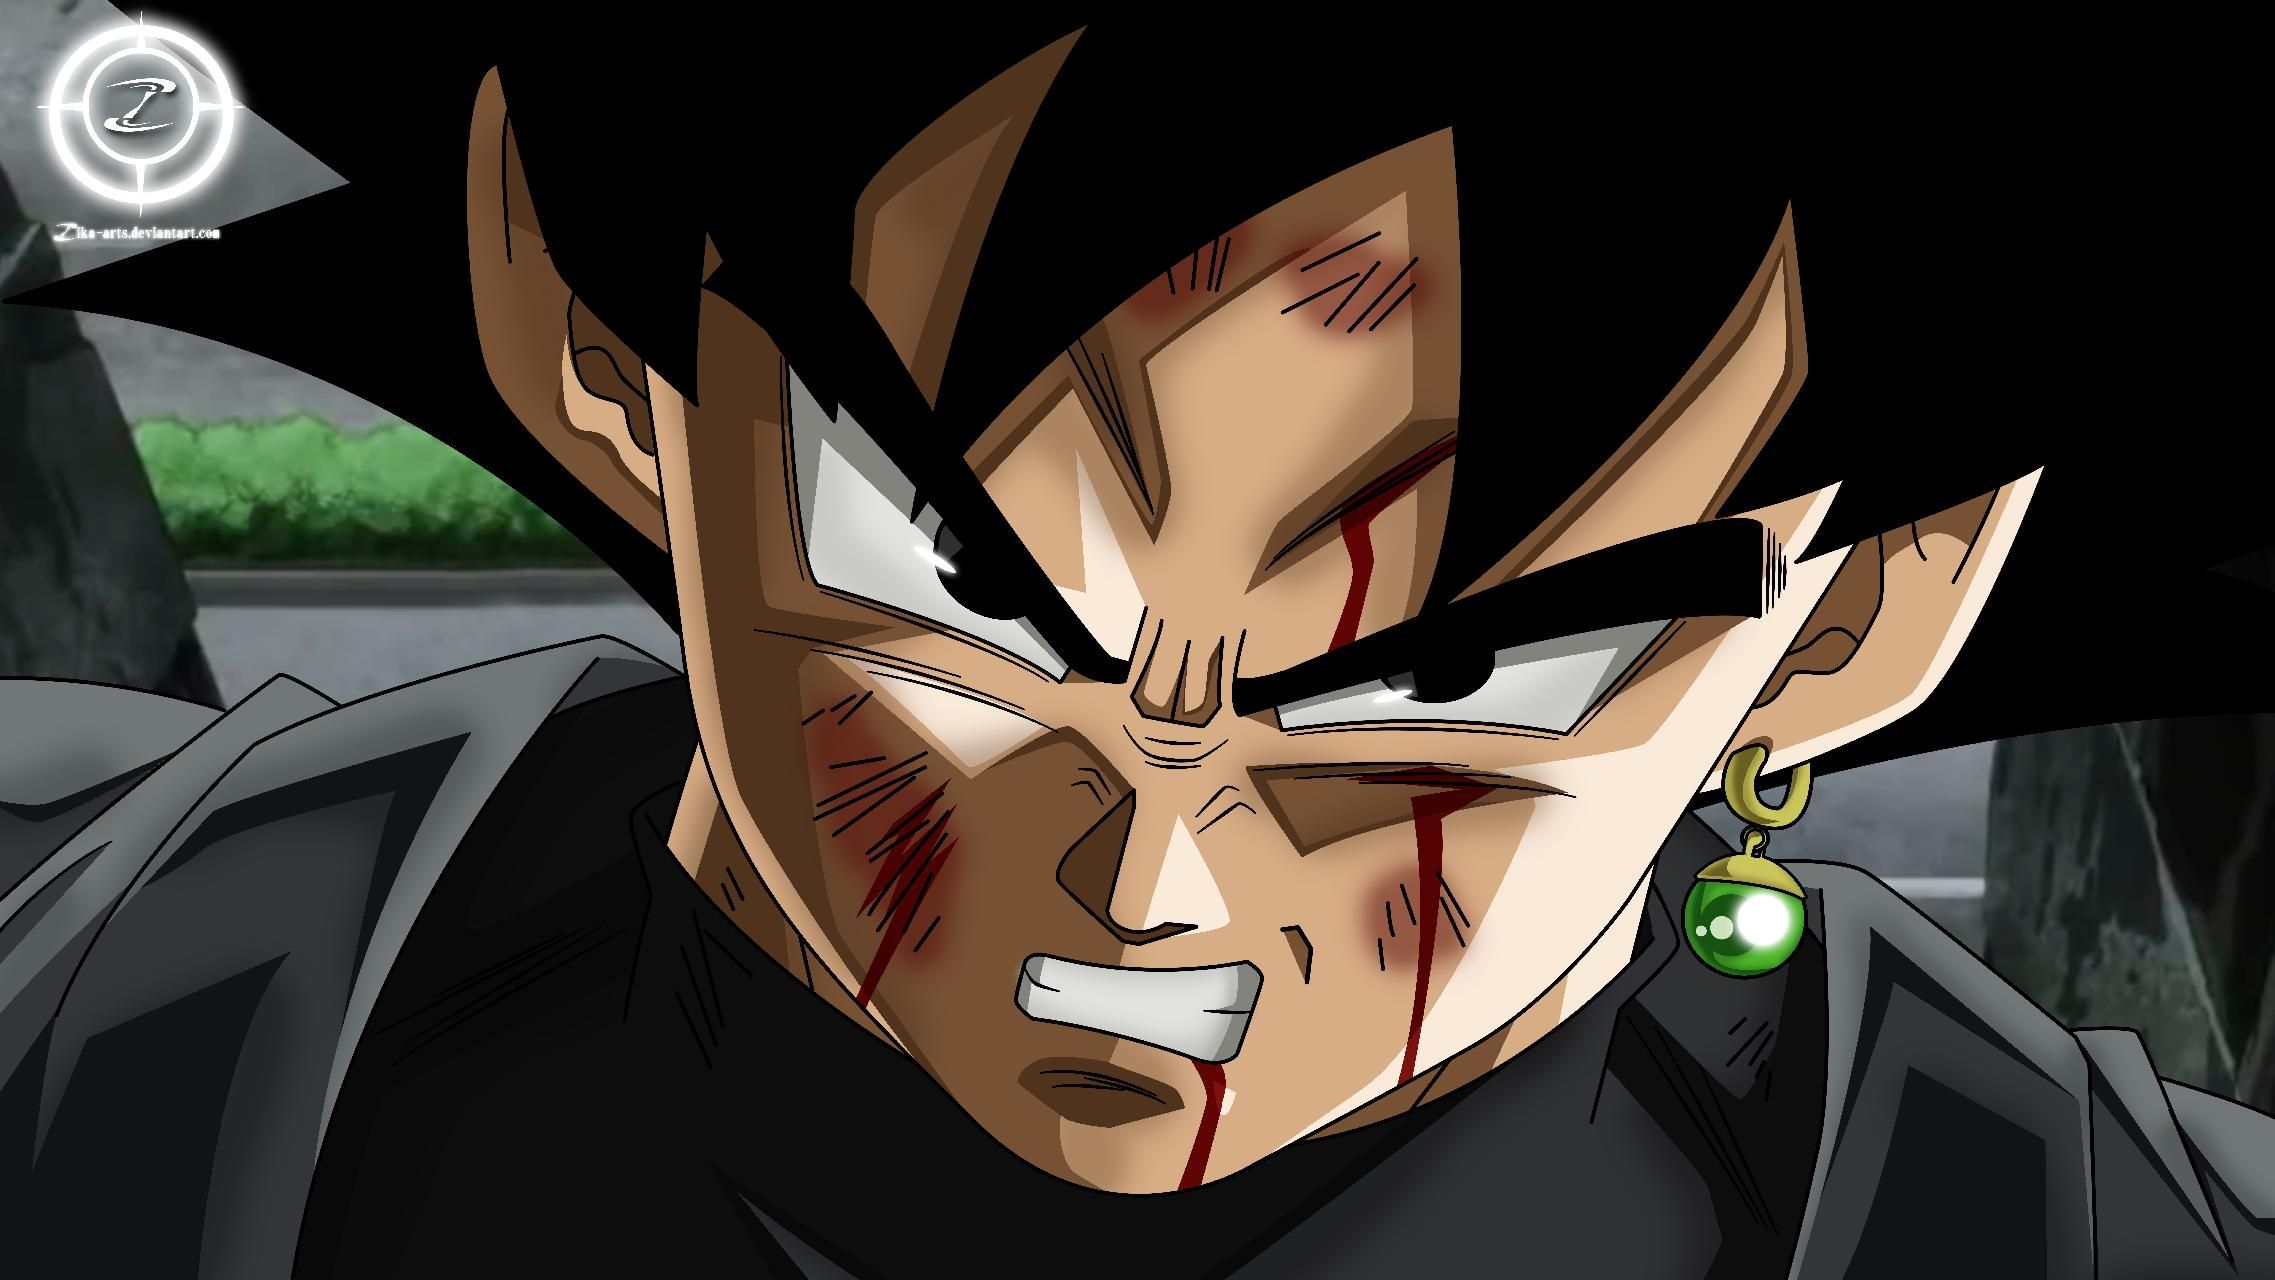 Goku black arc ideas. goku black, goku, dragon ball art